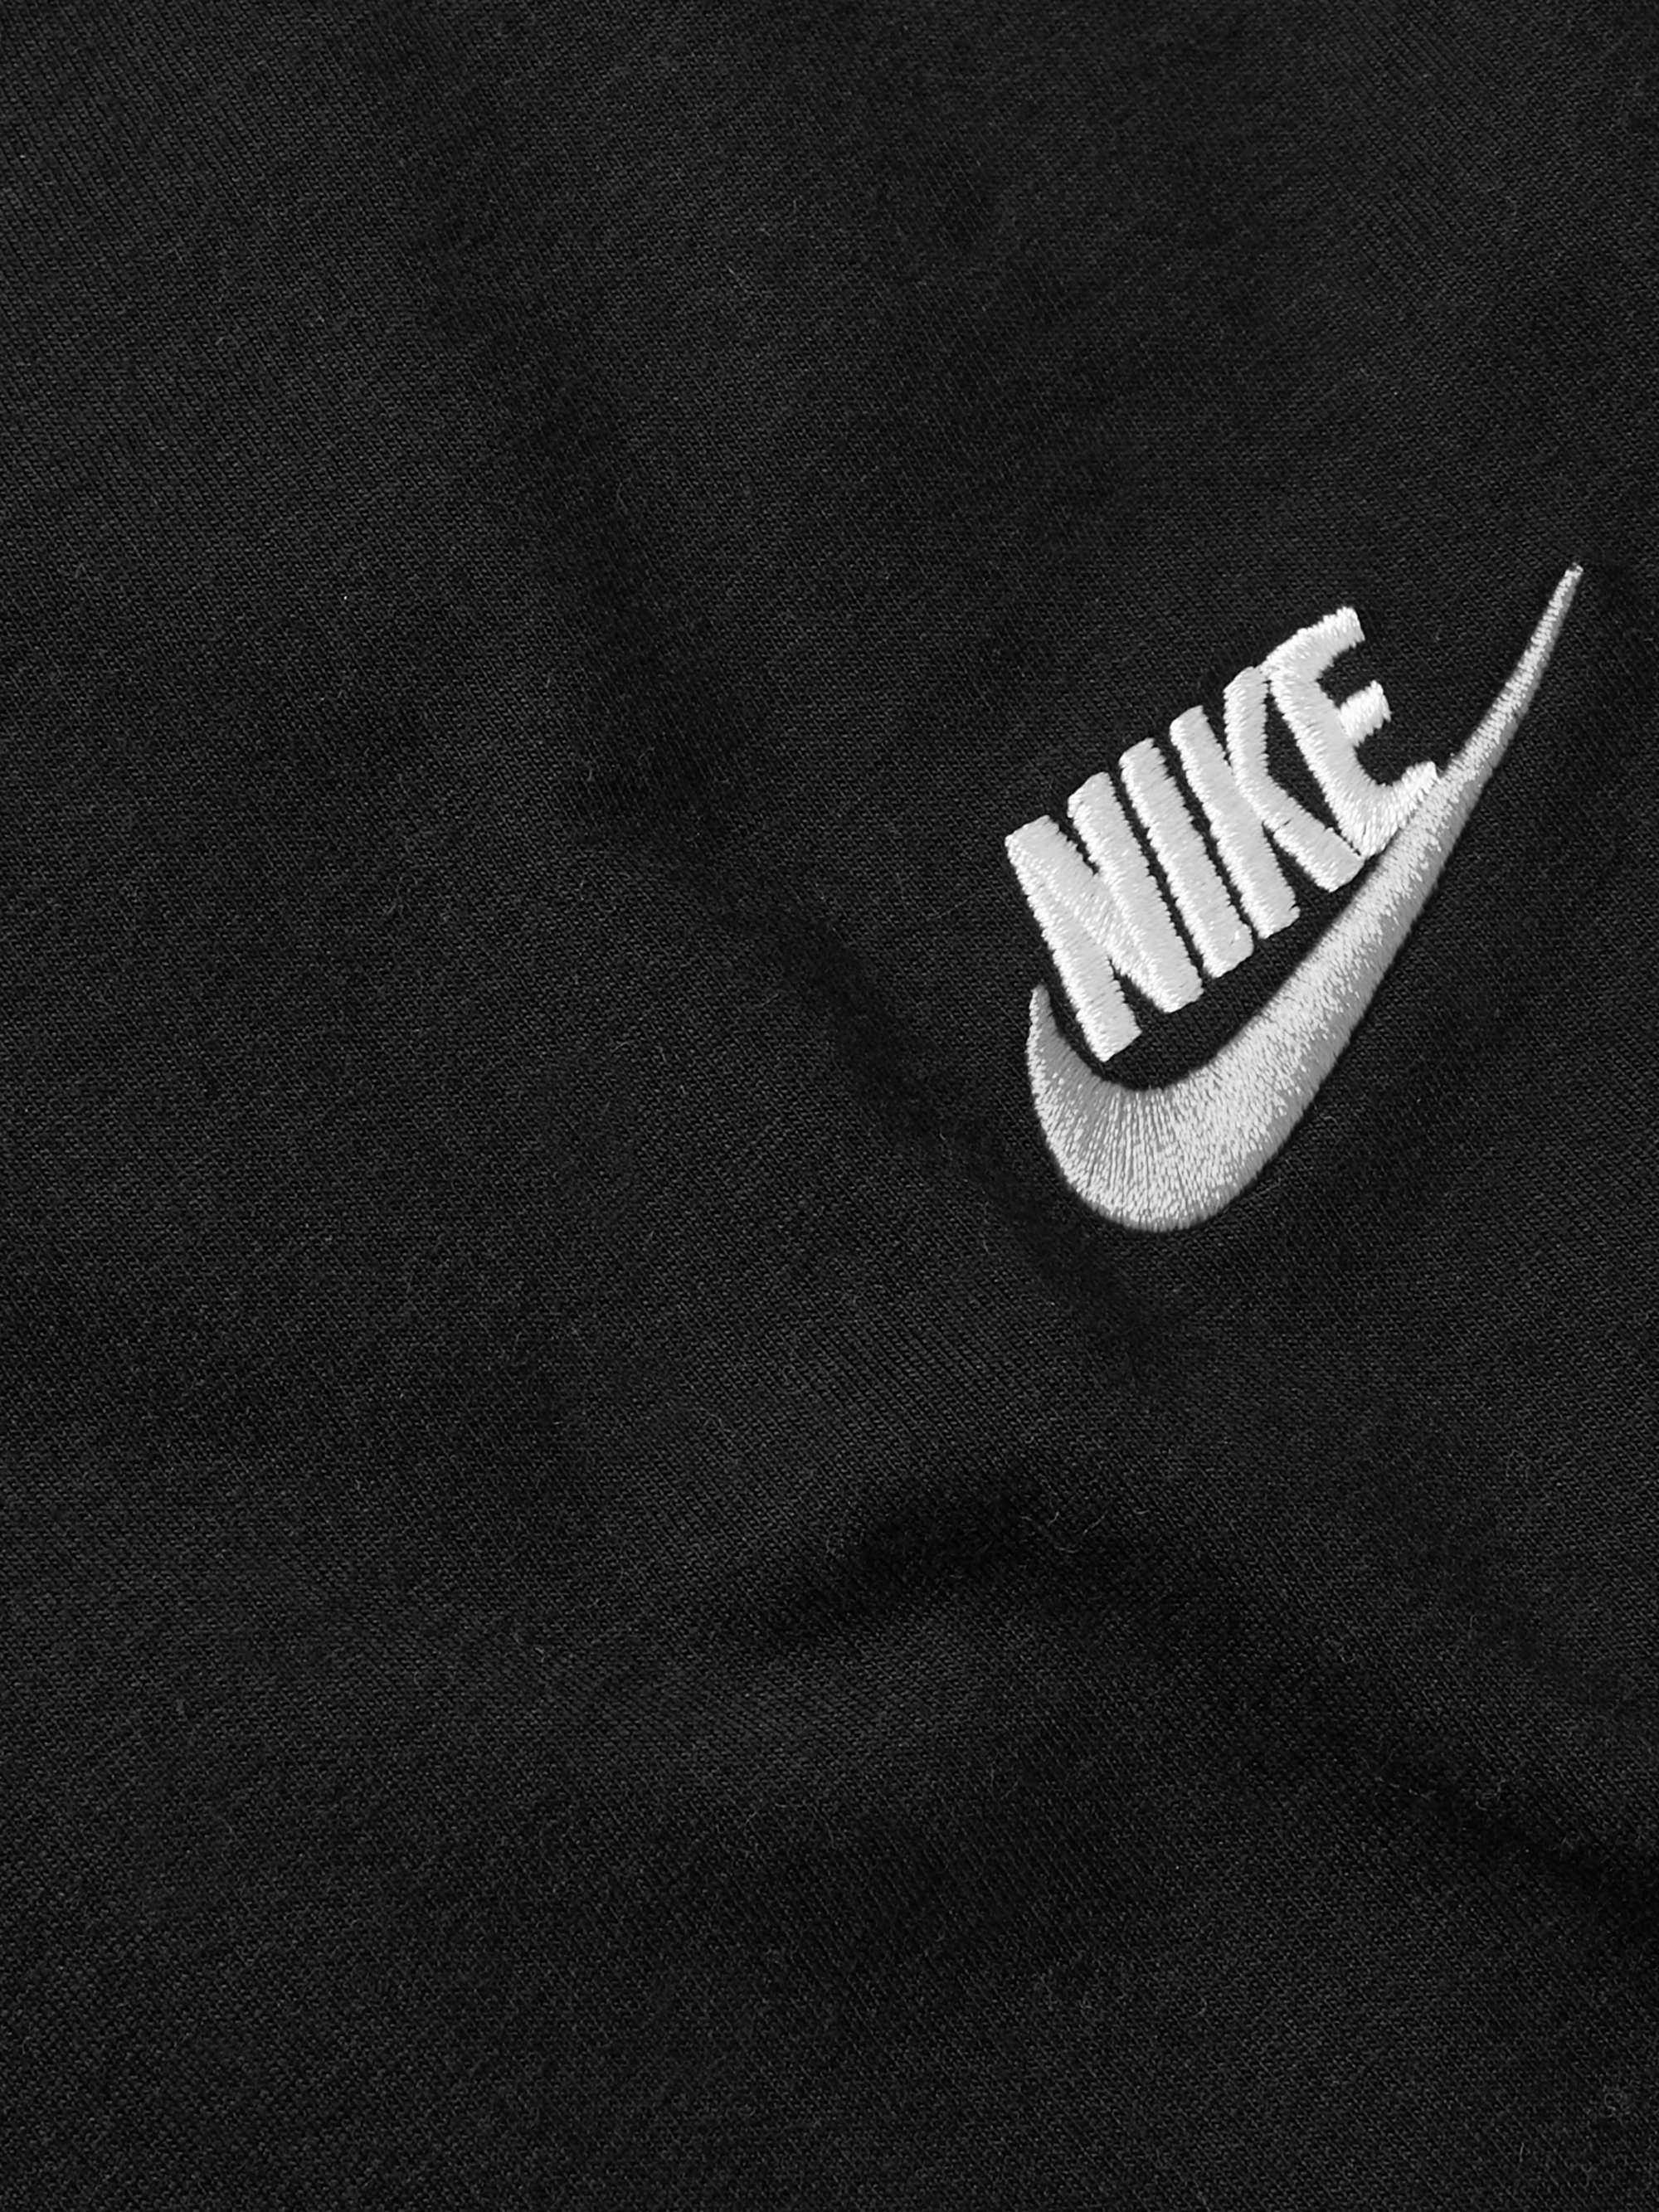 NIKE Sportswear Club Logo-Embroidered Cotton-Jersey T-Shirt